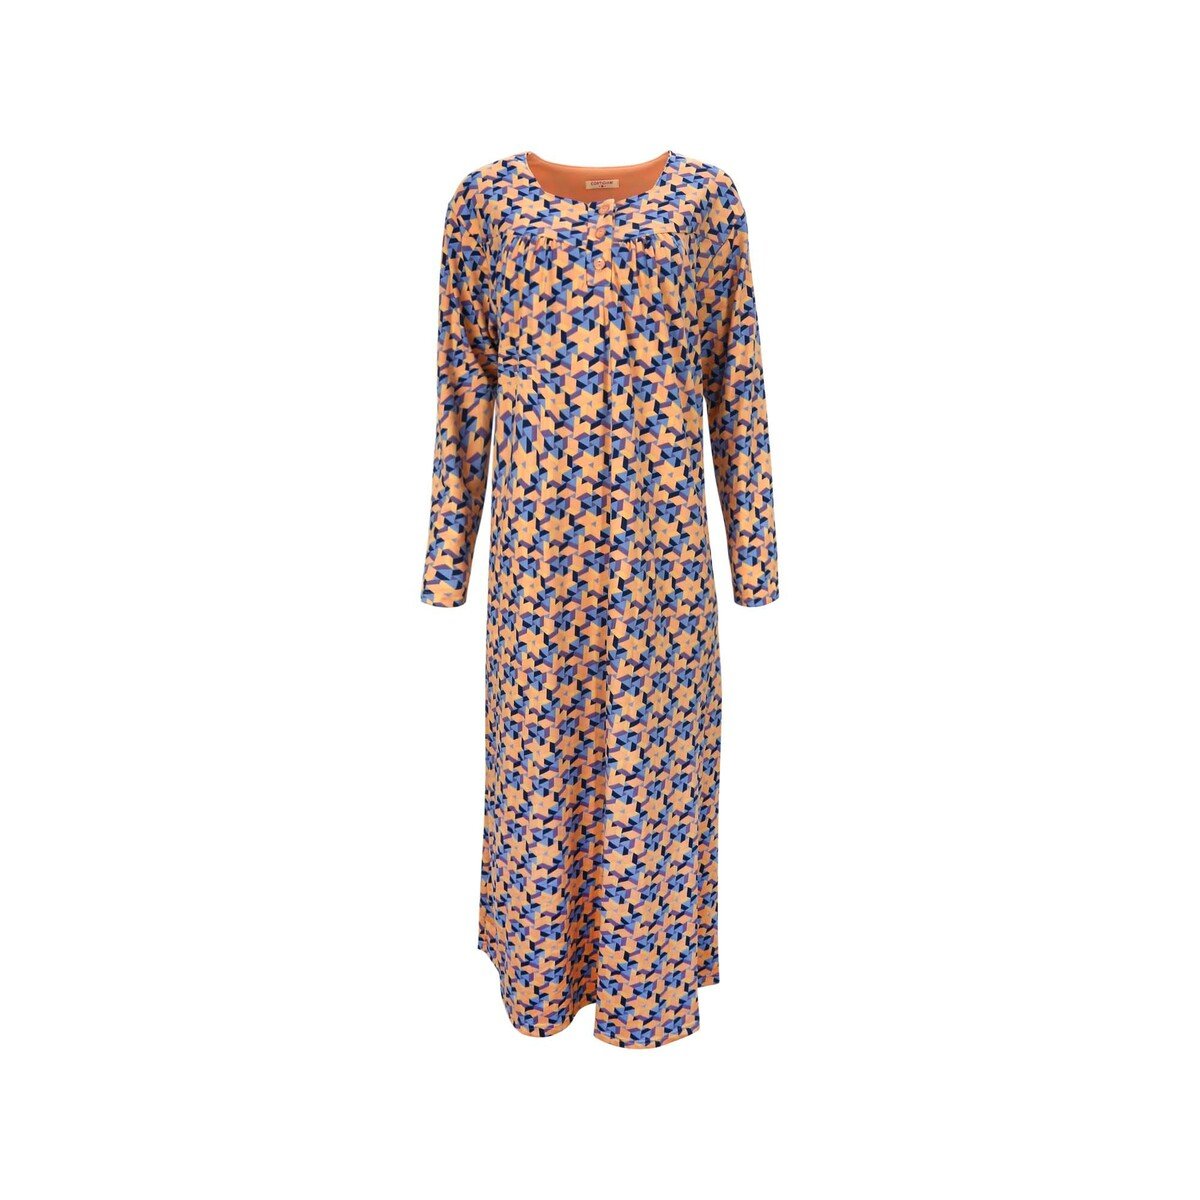 Cortigiani Women's Night Gown Long Sleeve DL-019 XX-Large